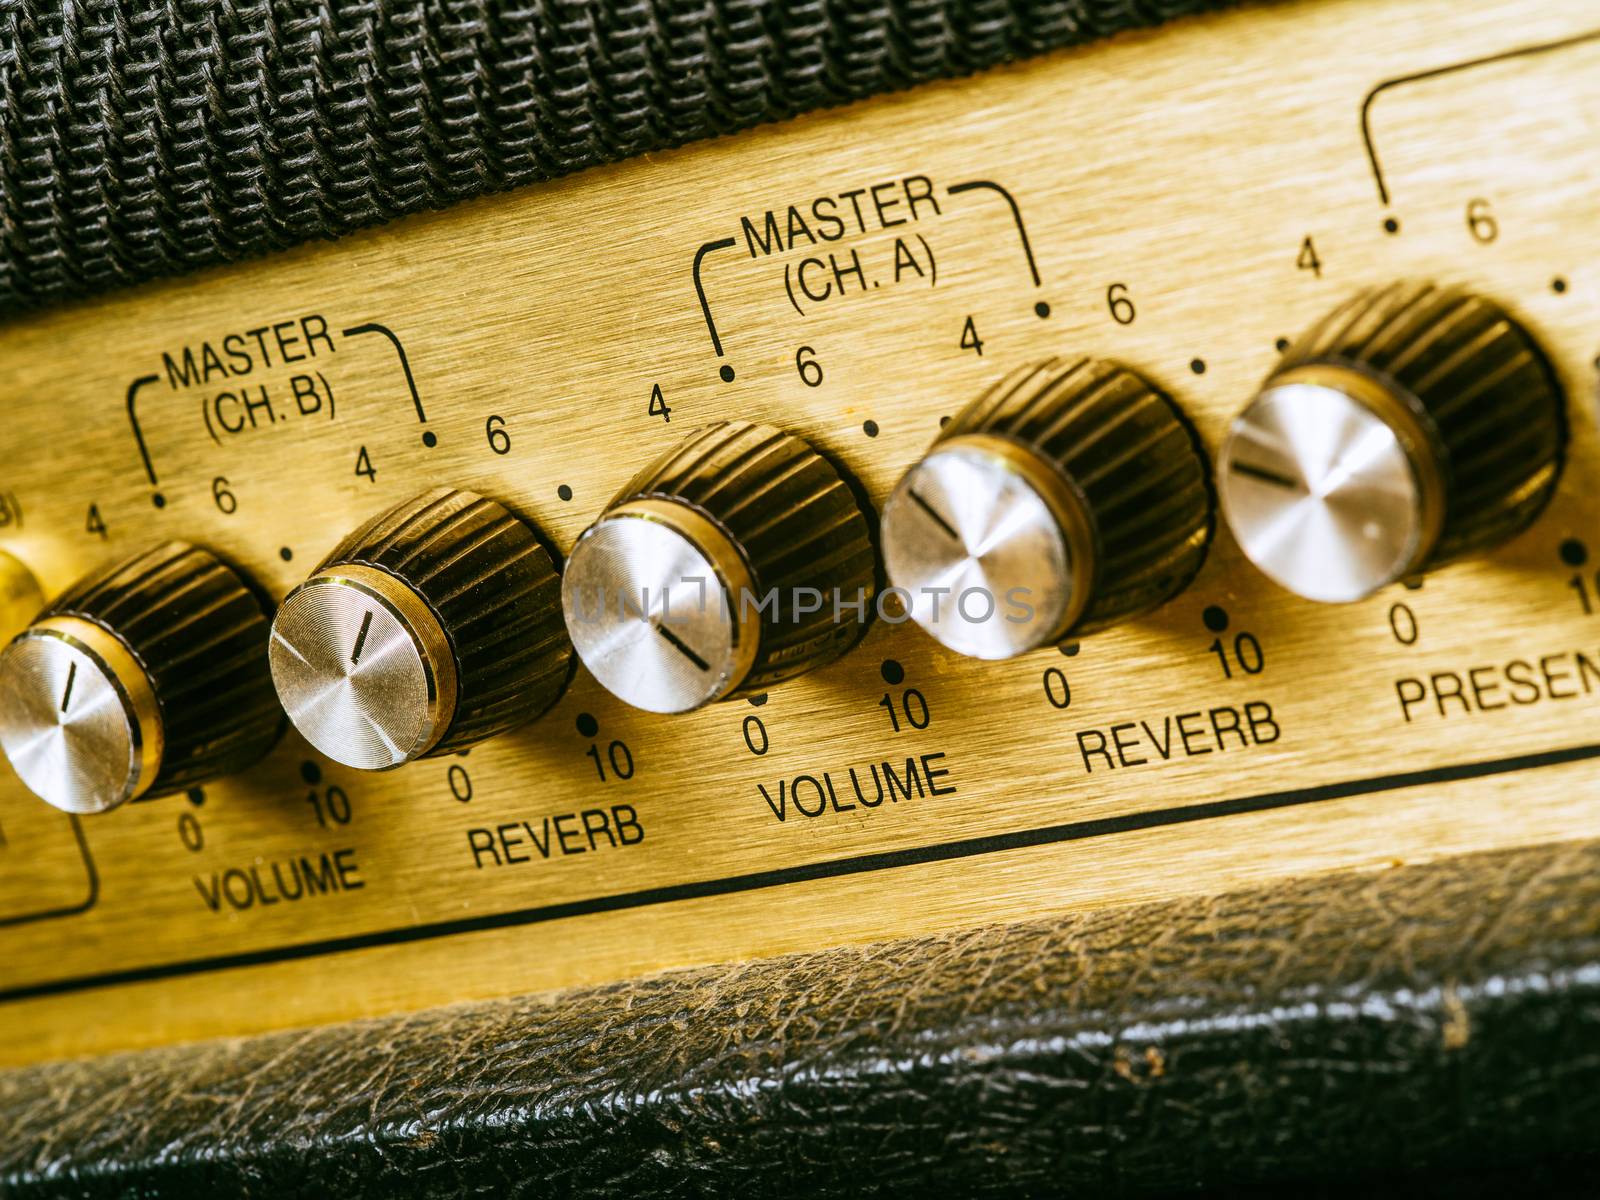 Vintage amplifier volume knob by sumners